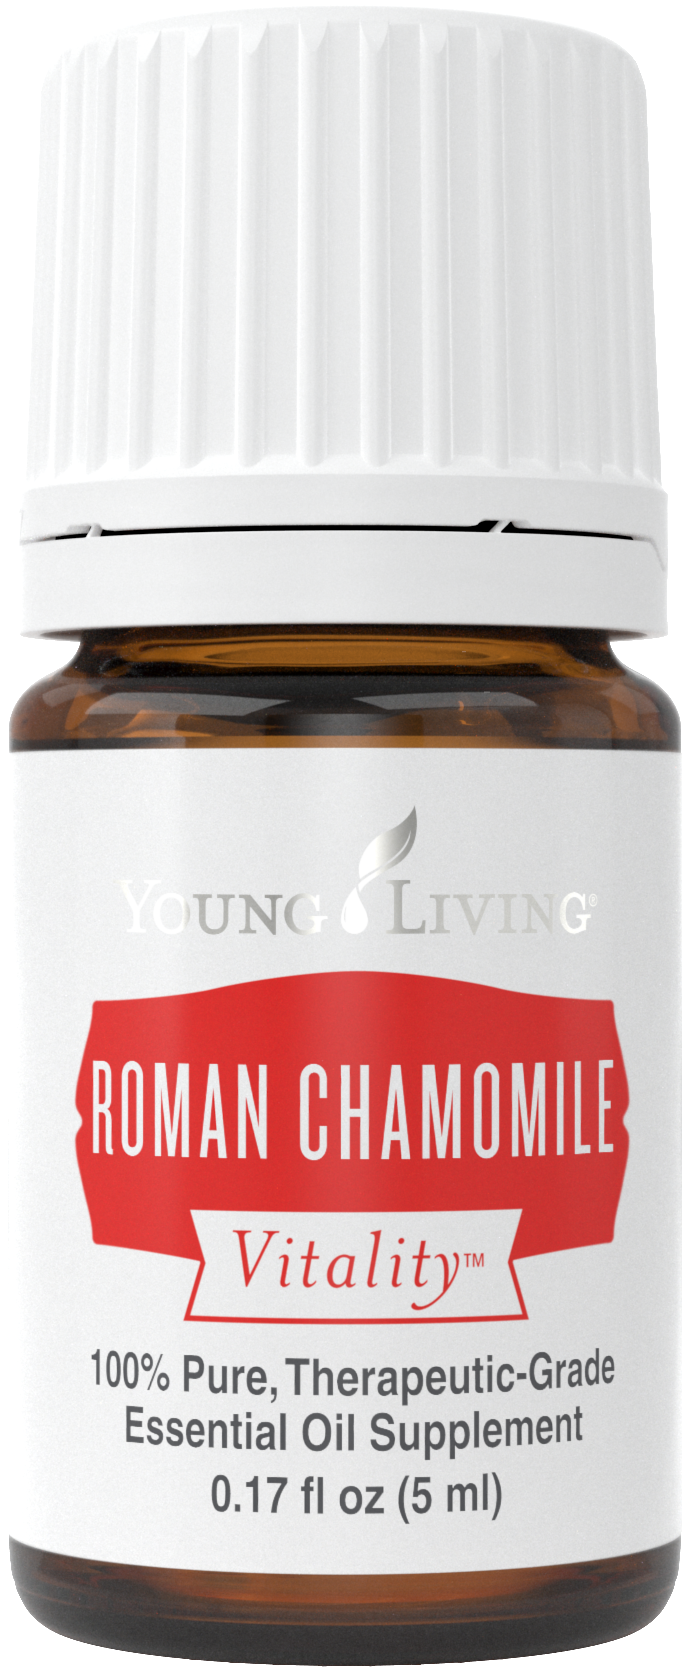 Roman Chamomile Vitality Silo.png